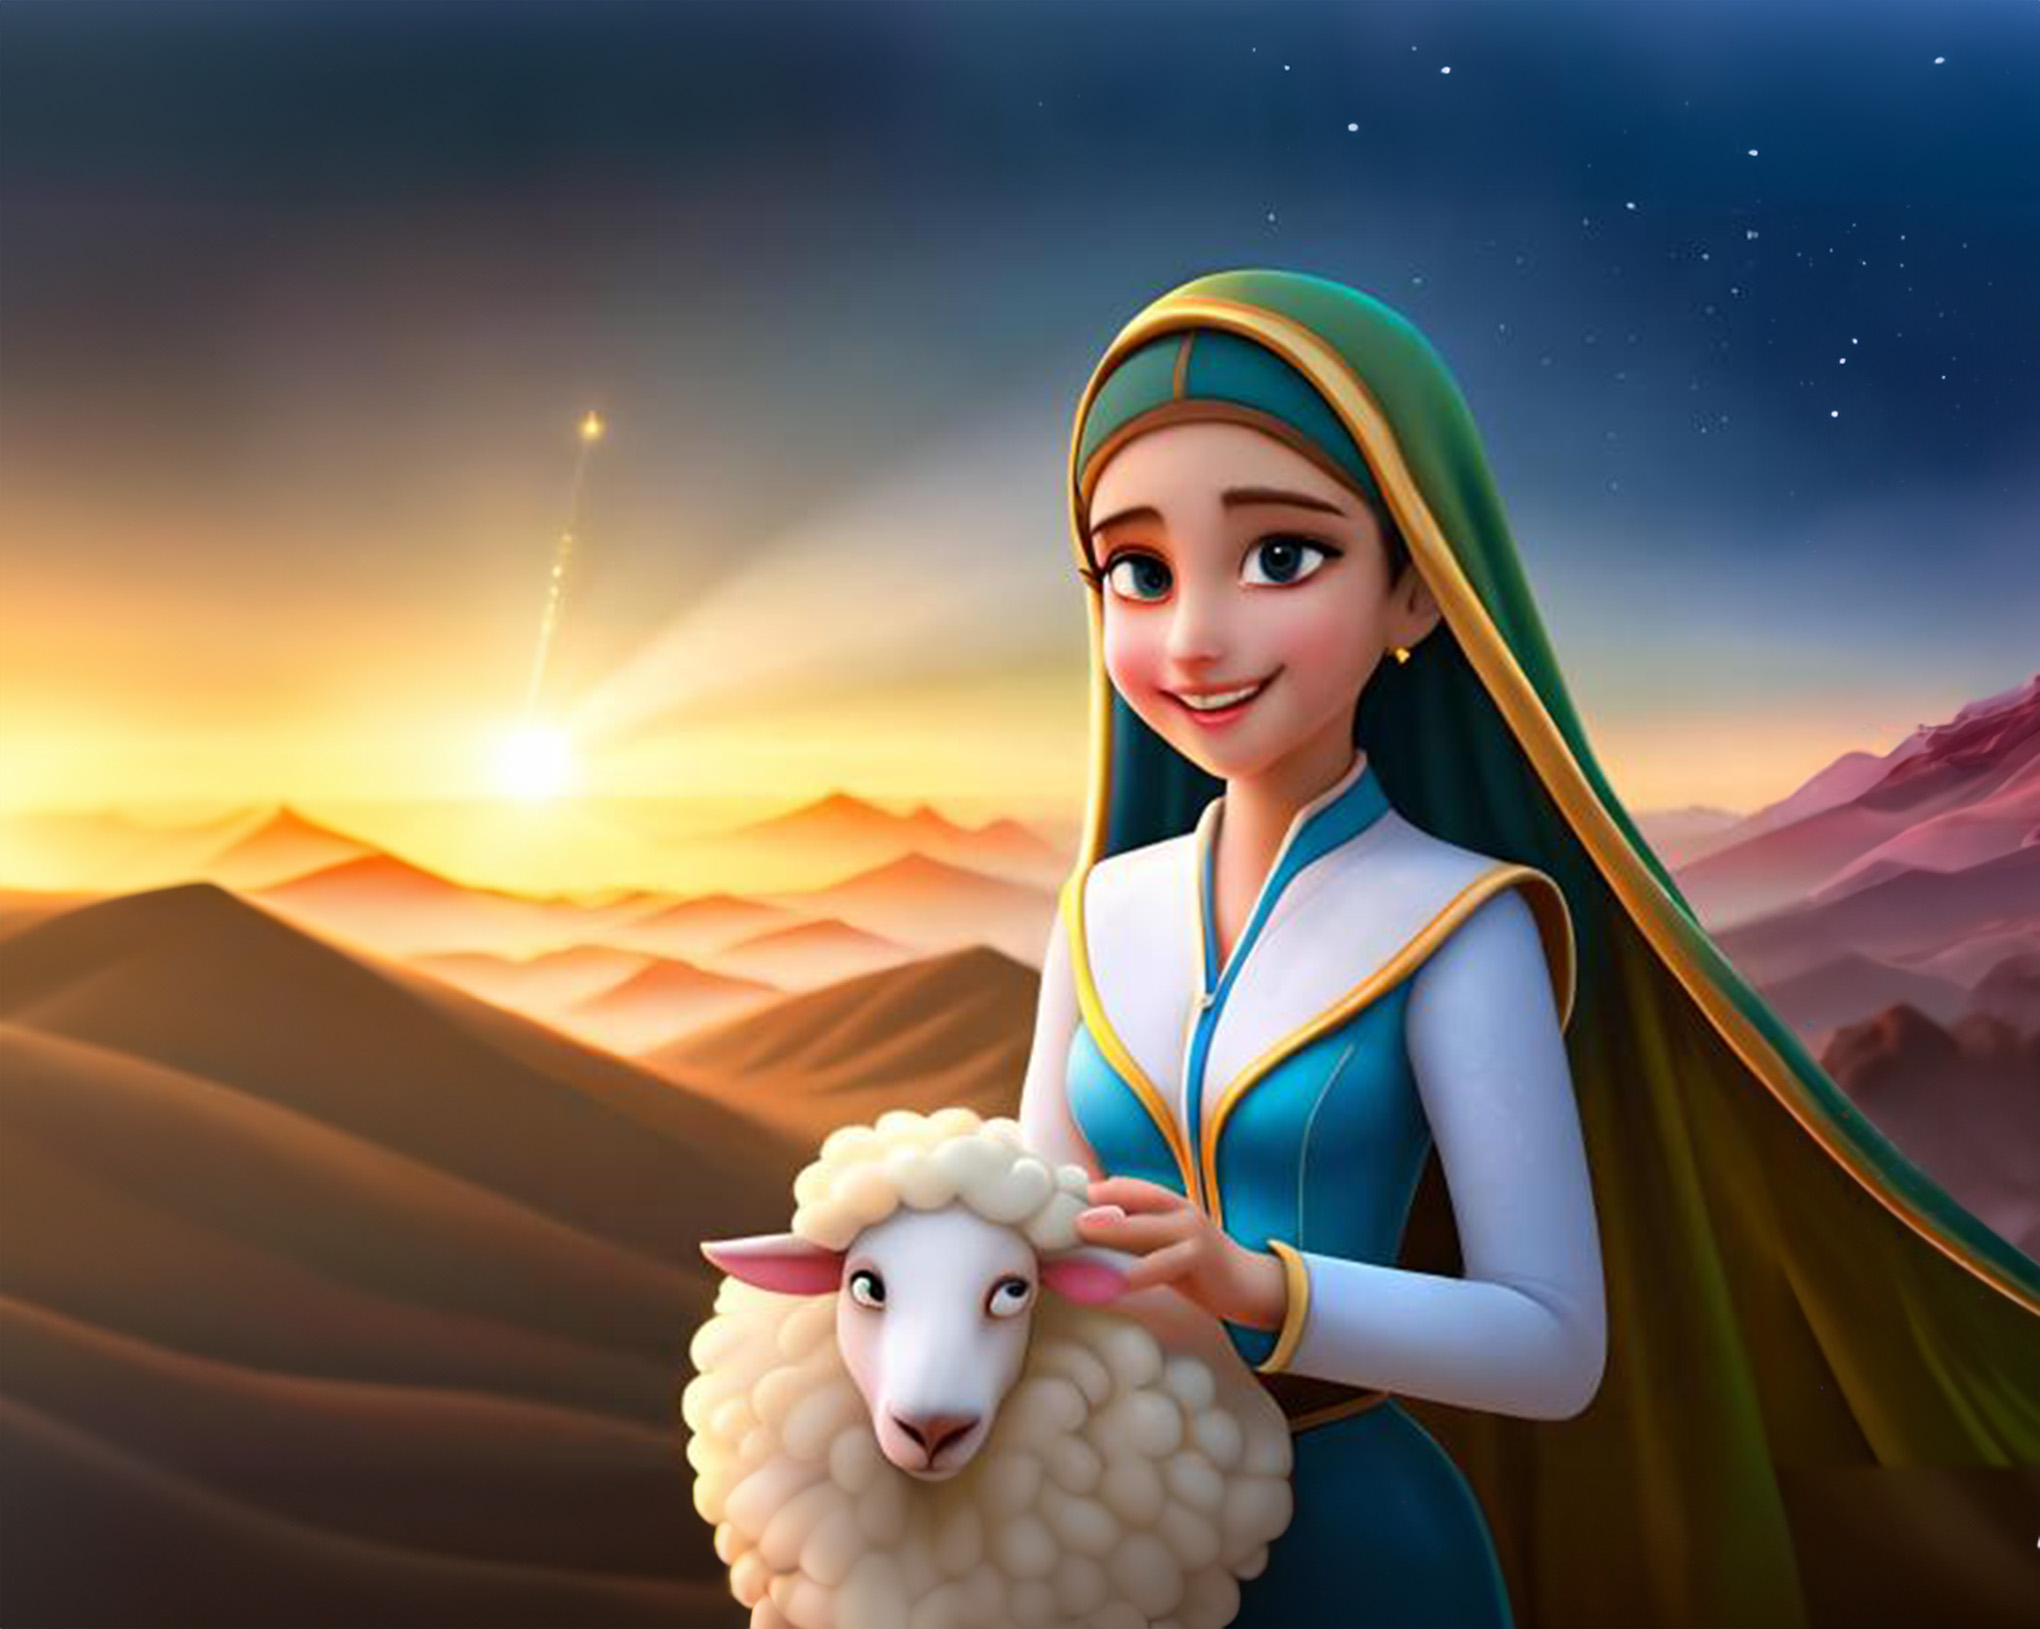 Muslim Princess With Goat Celebrating Eid al Adha Image Download For Free